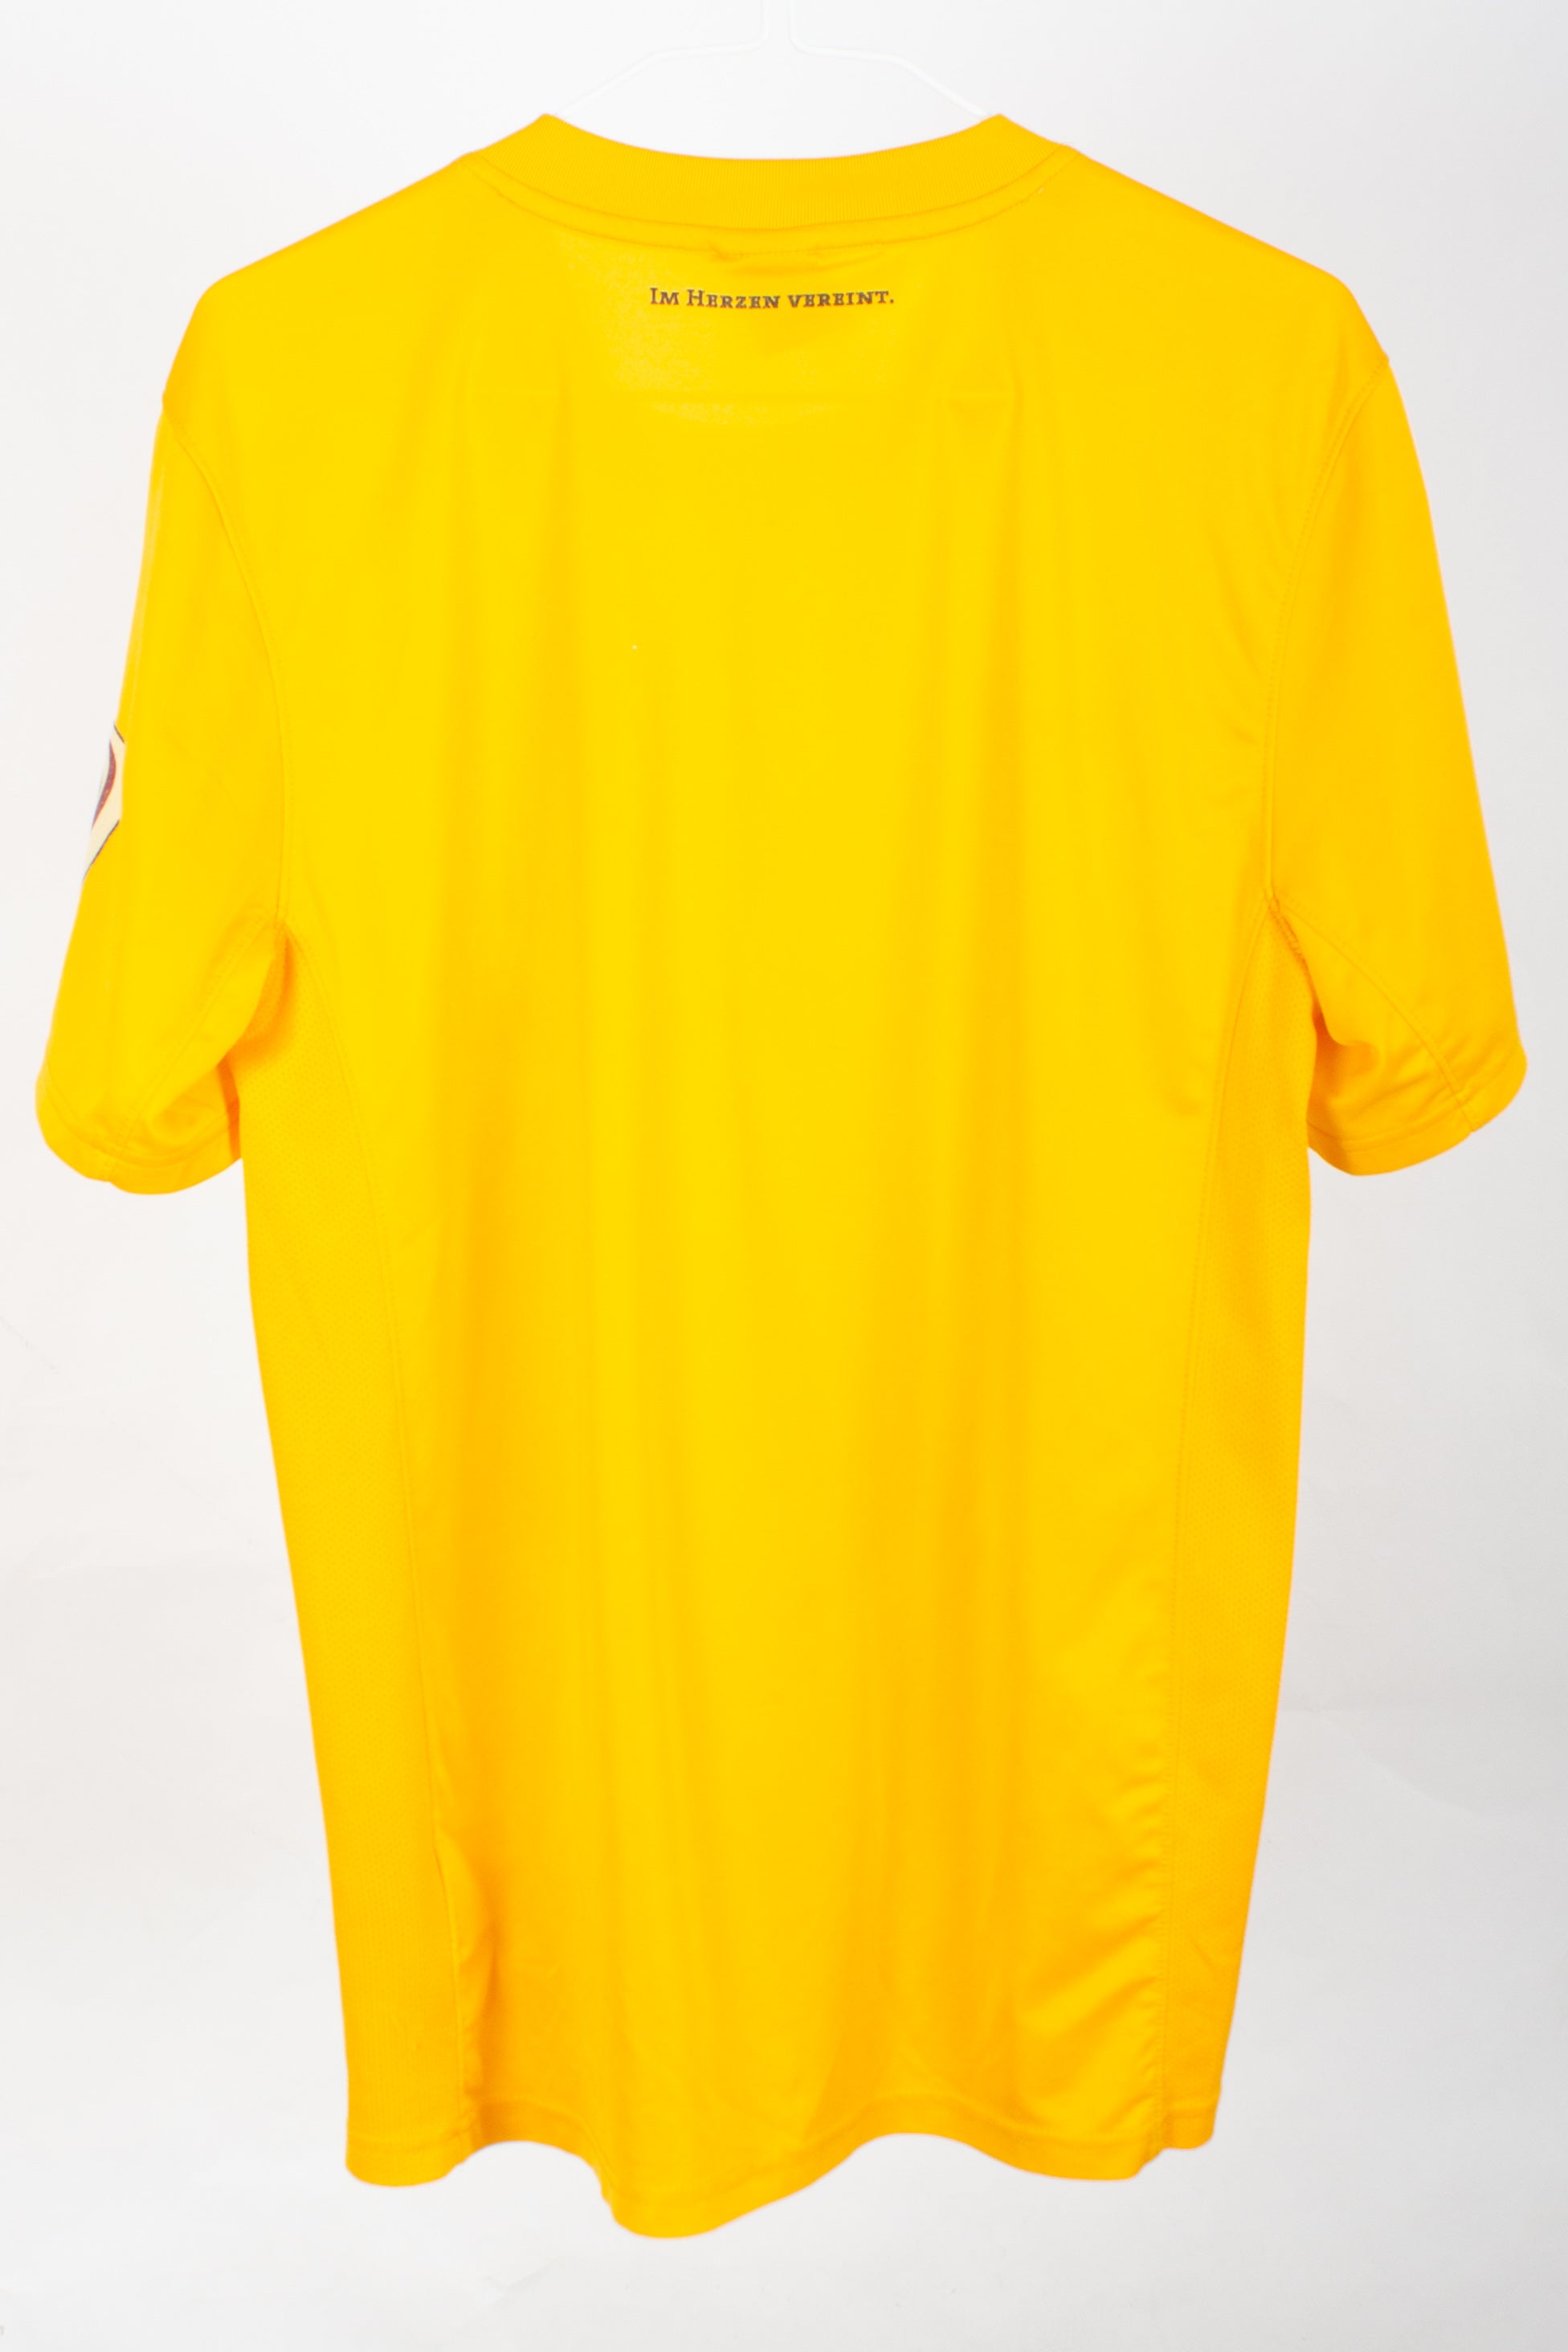 Dynamo Dresden 2014/15 Home Shirt (S)